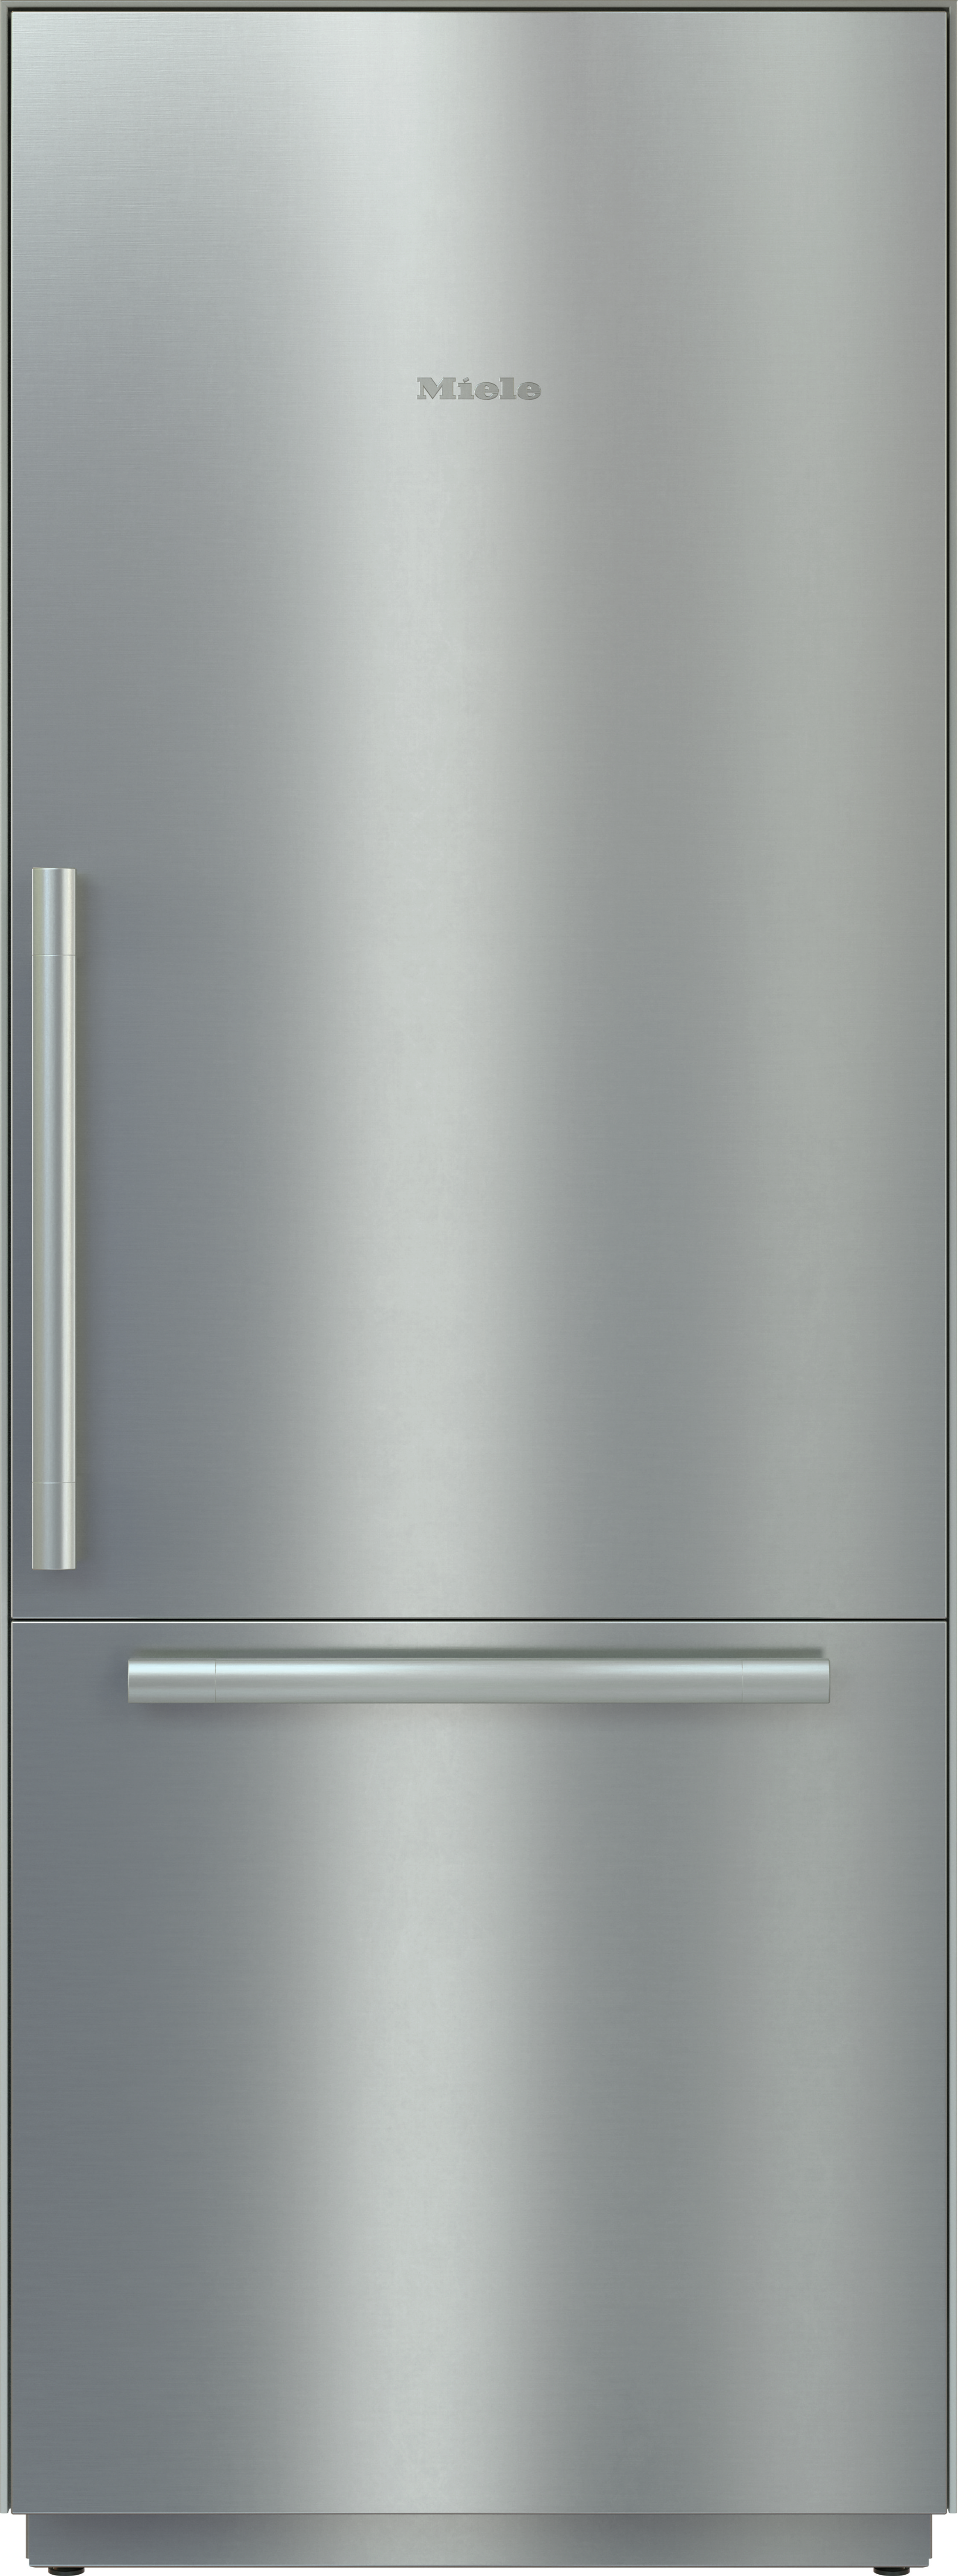 Miele 30 Inch MasterCool 30 Built In Counter Depth Bottom Freezer Refrigerator KF2802SF